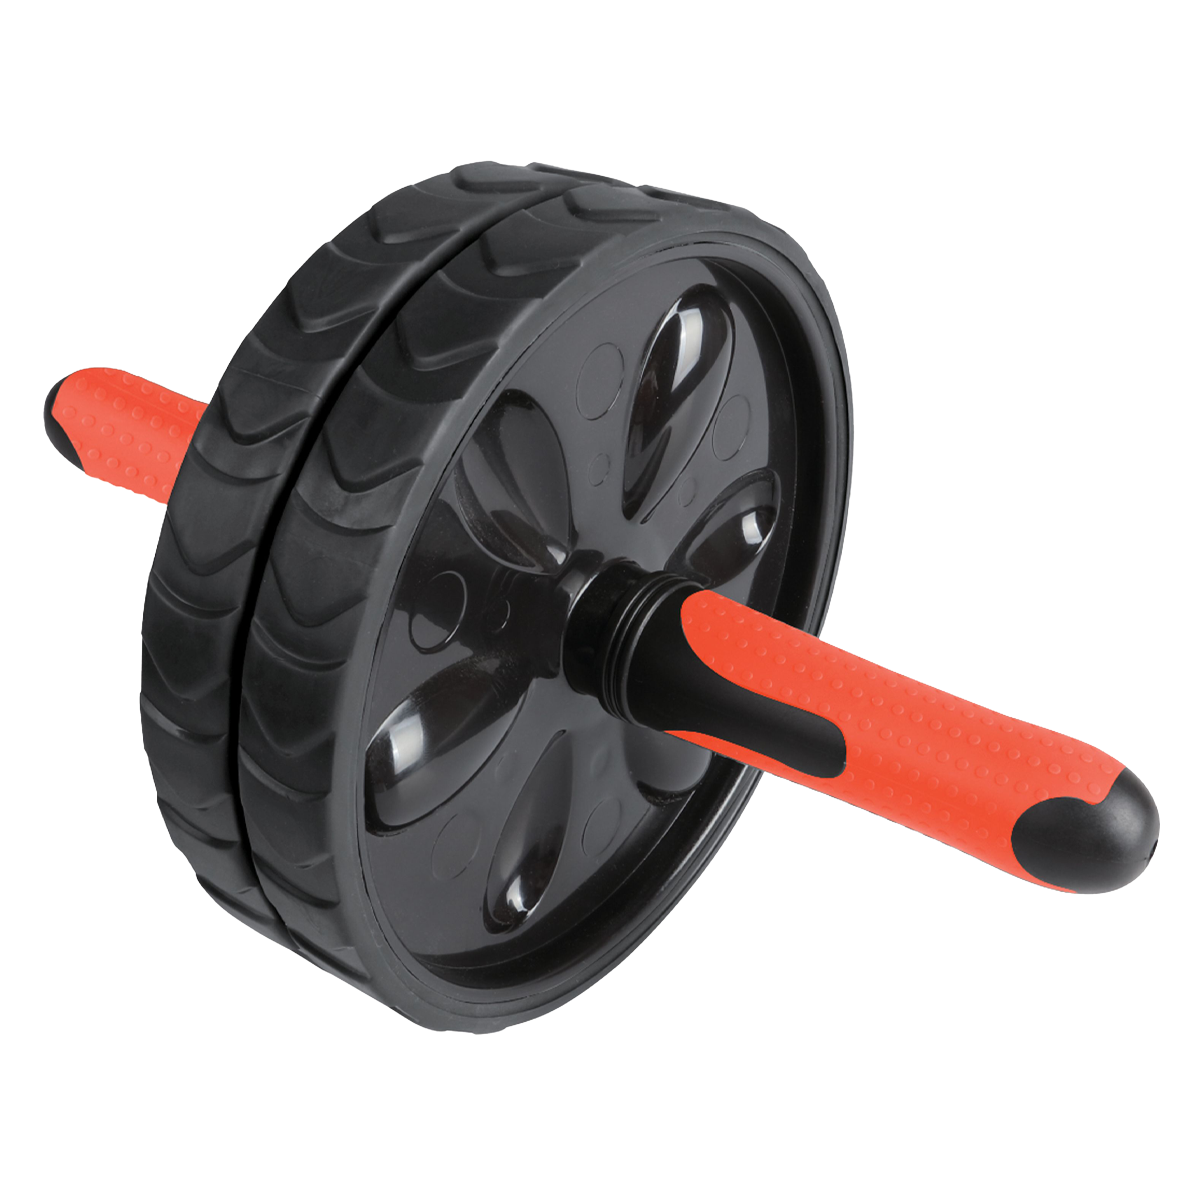 Abdominal training wheel